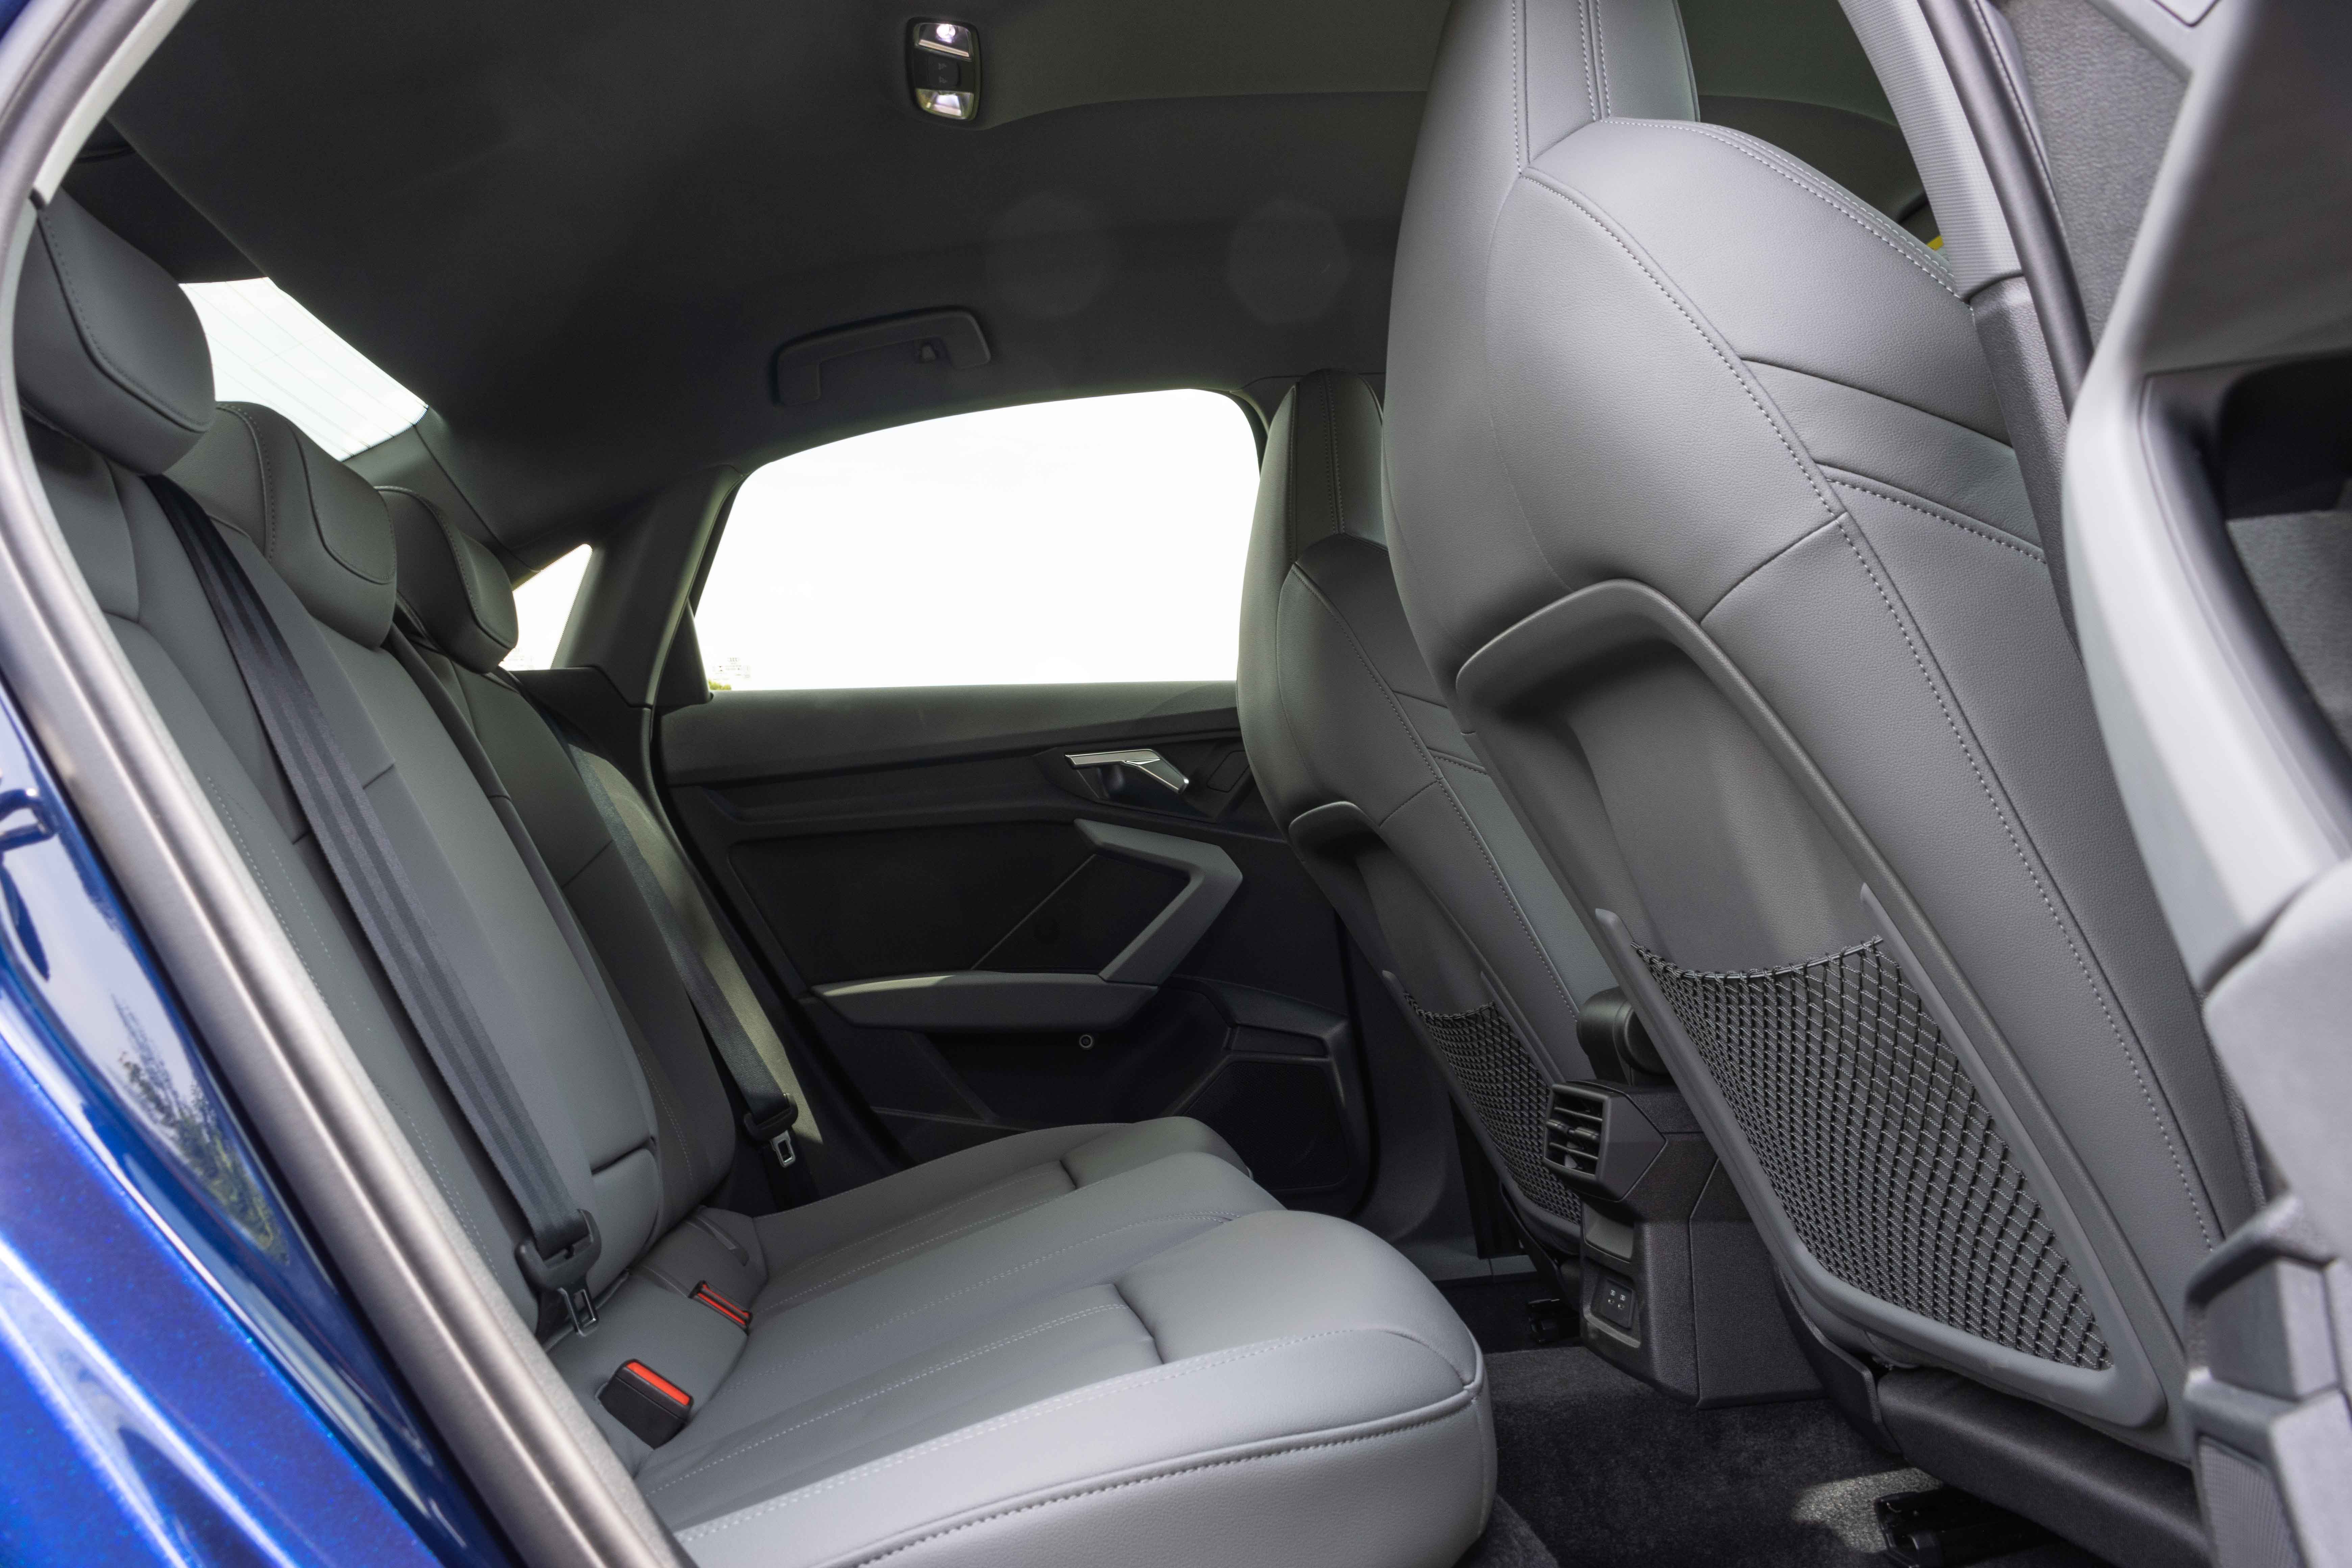 2022 Audi A3 Sedan 1.0 TFSI S tronic Singapore - Rear seats